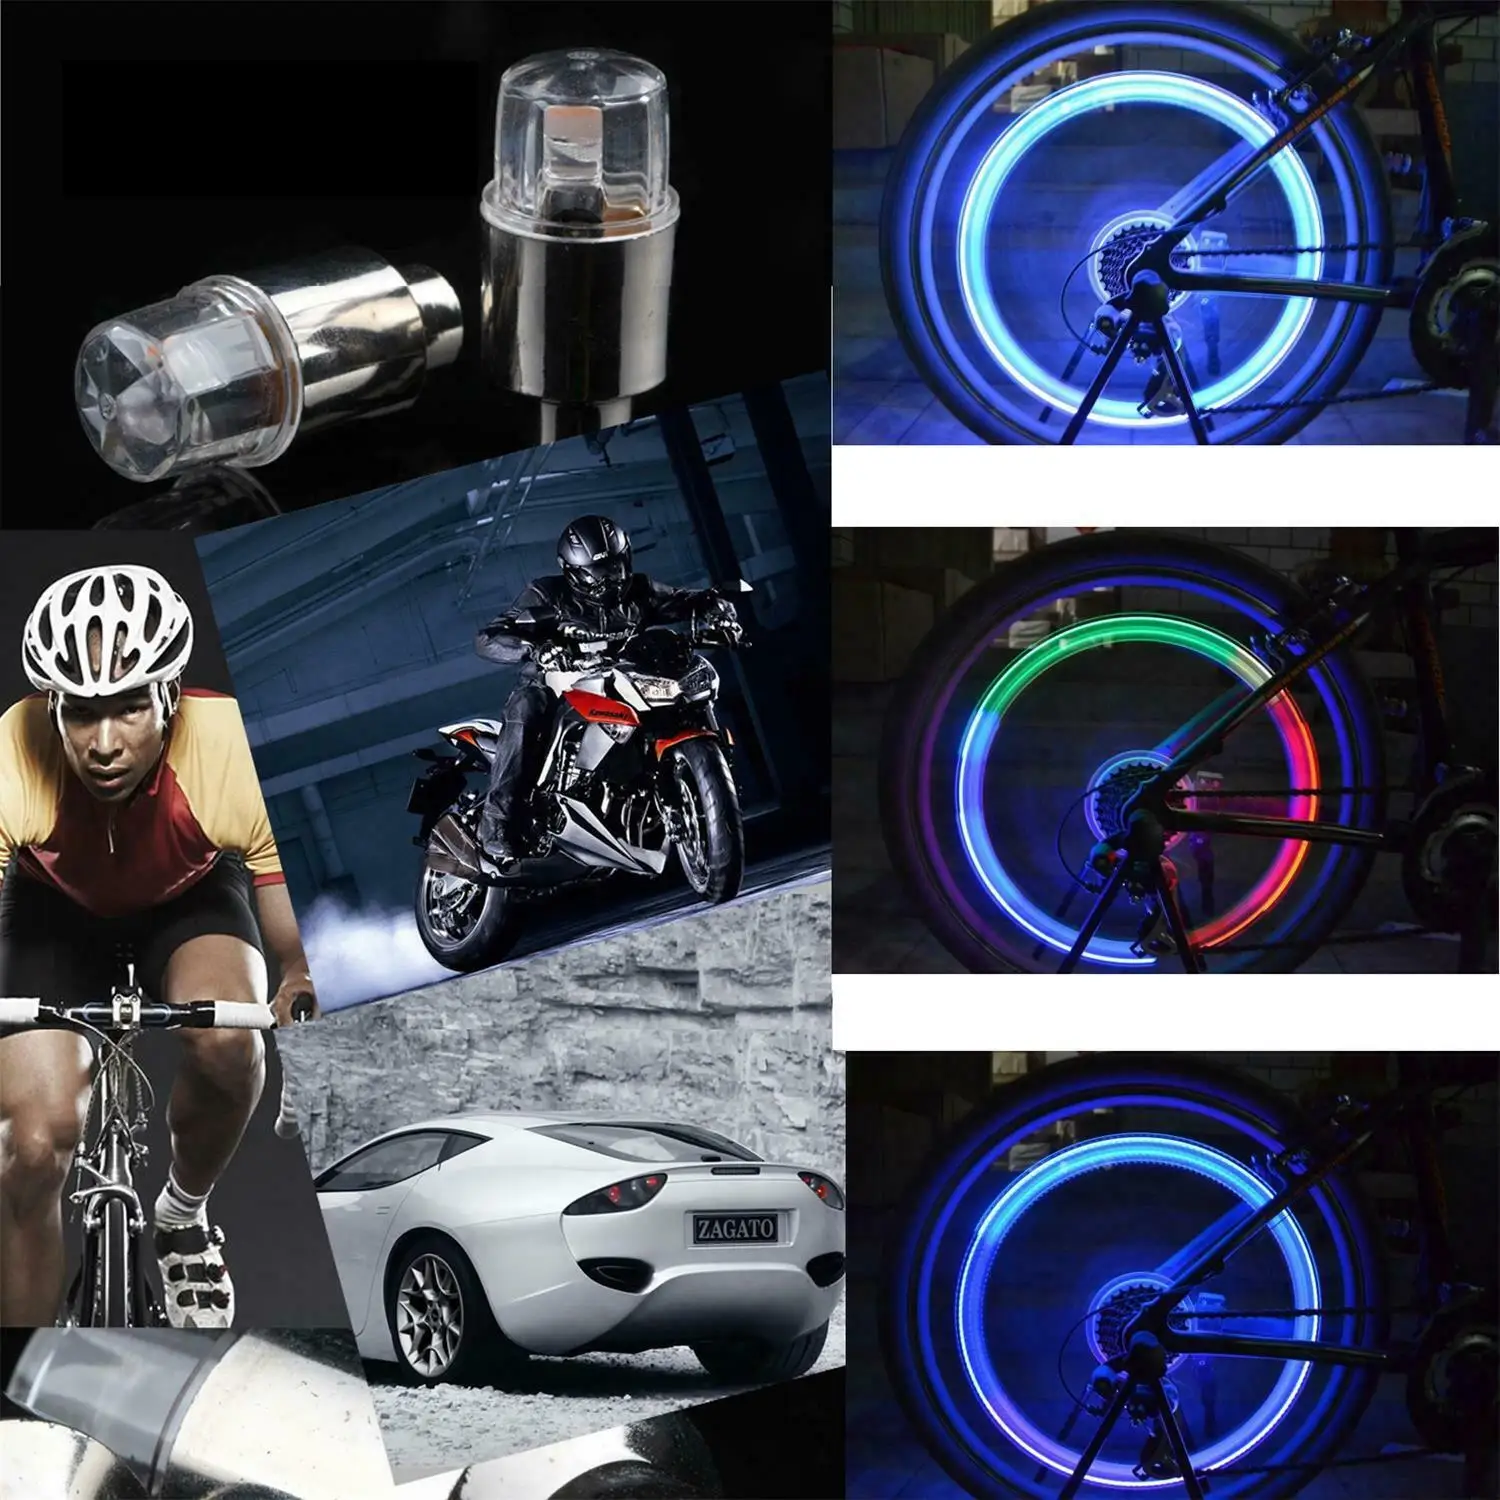 LABIUO 2PCS Bike Car Motorcycle Wheel Tyre Valve Cap Flash LED Light Lamp Accessories 